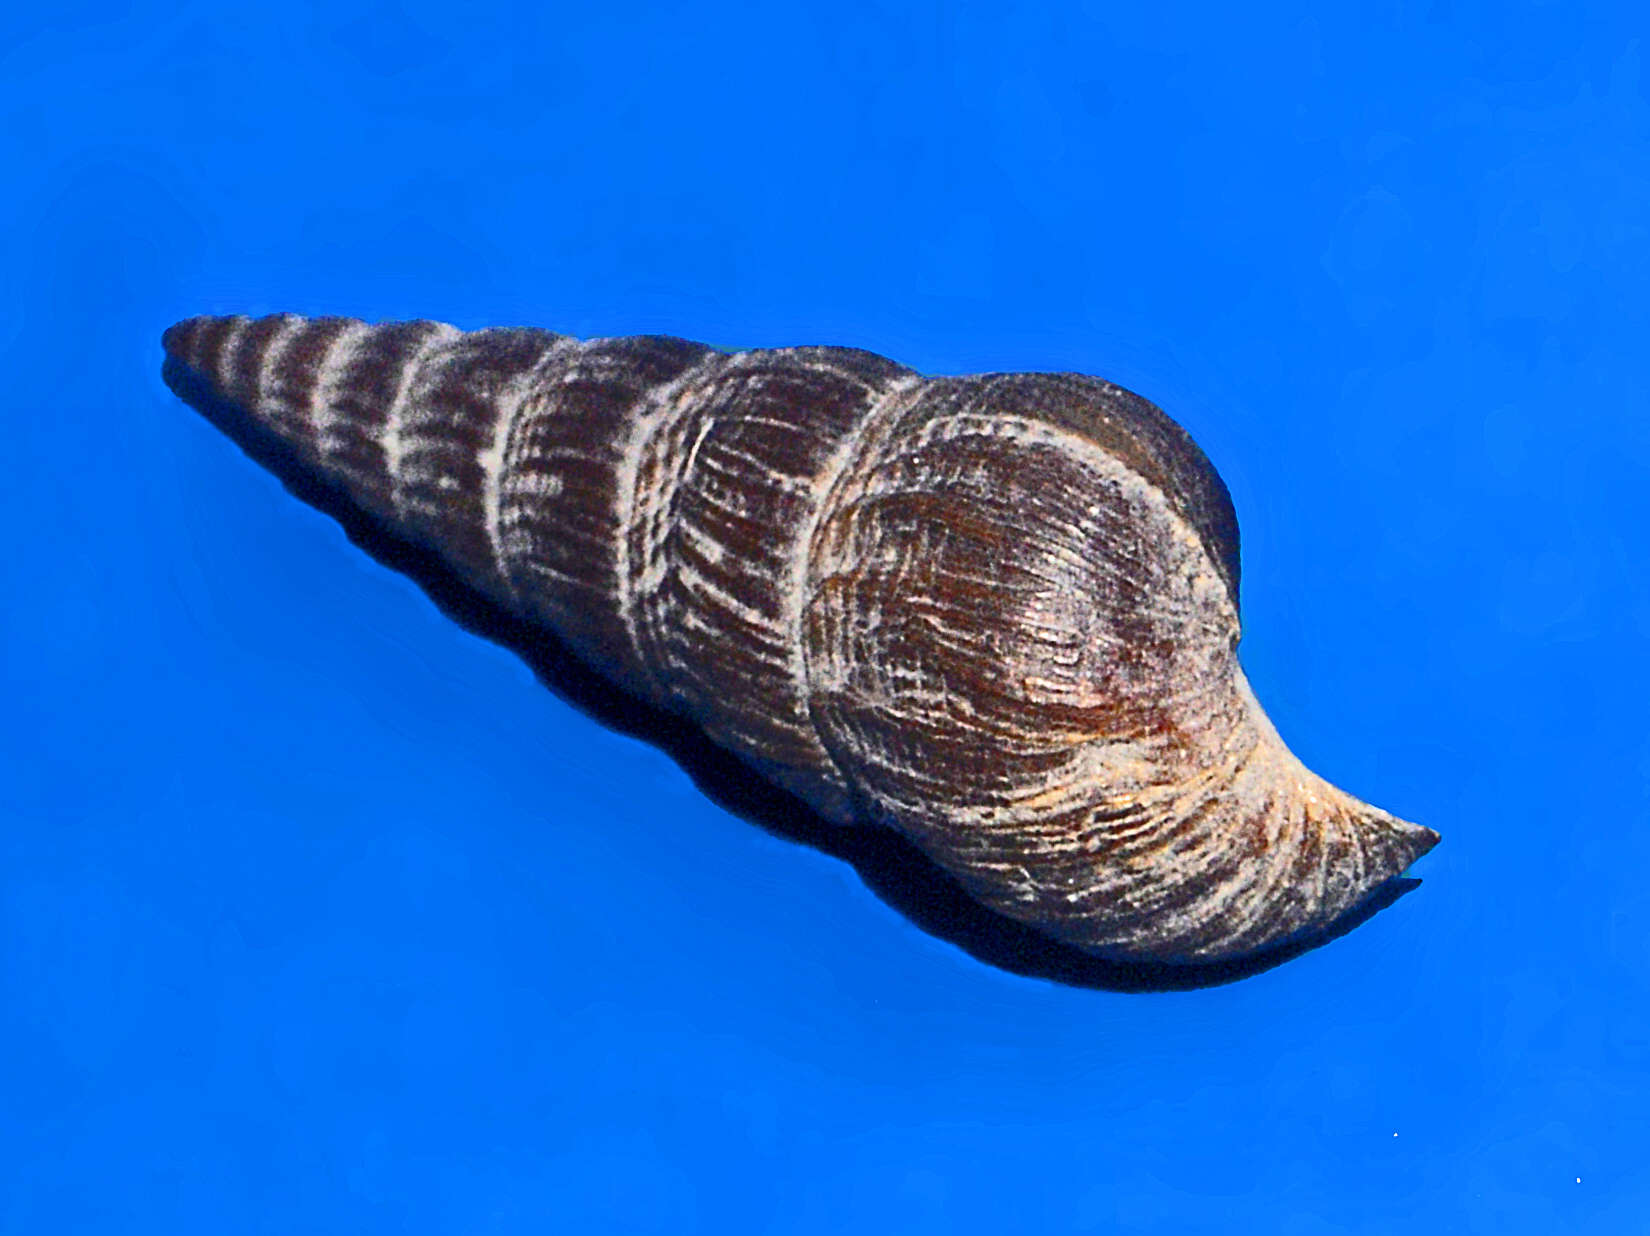 Plancia ëd Jagora asperata (Lamarck 1822)